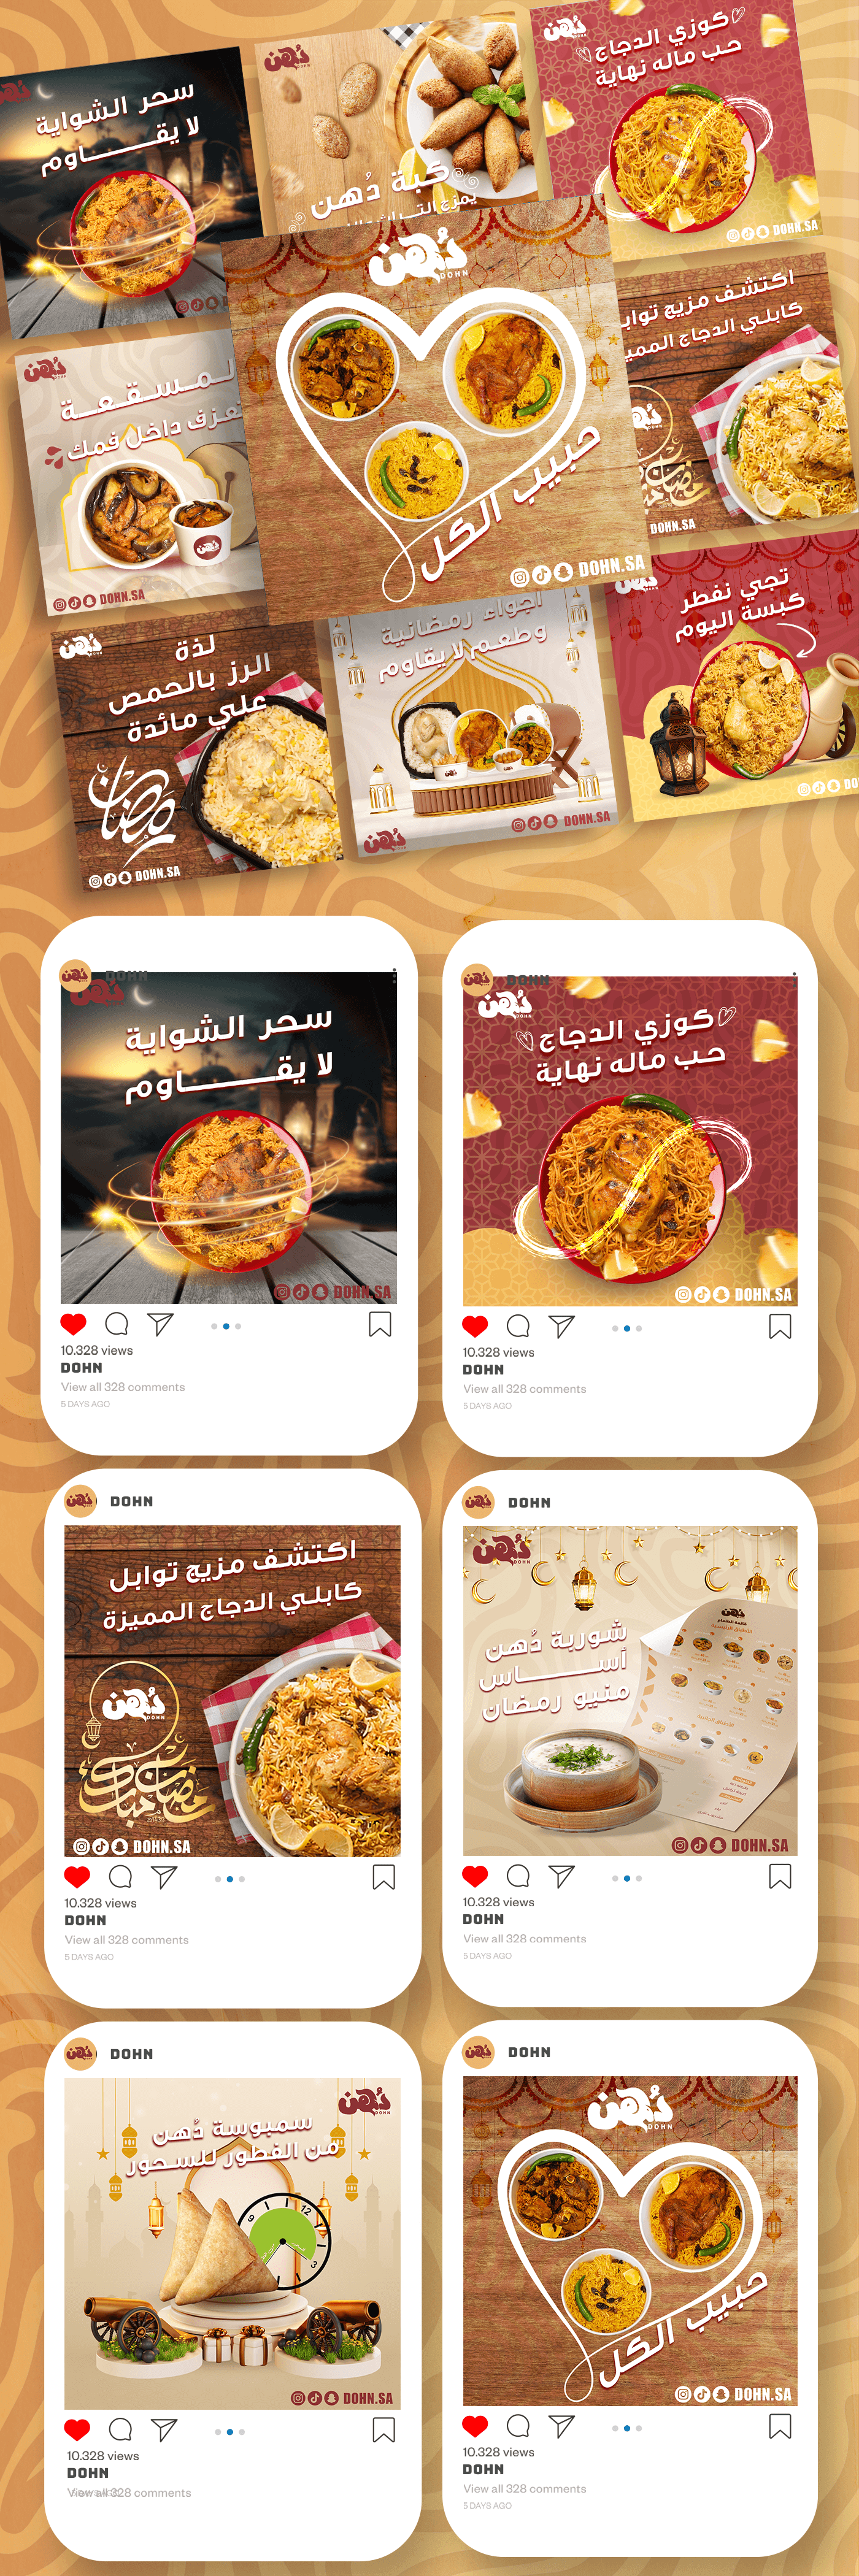 Social media post ramadan Food  Advertising  restaurant Socialmedia ads instagram ramadan design Saudi Arabia